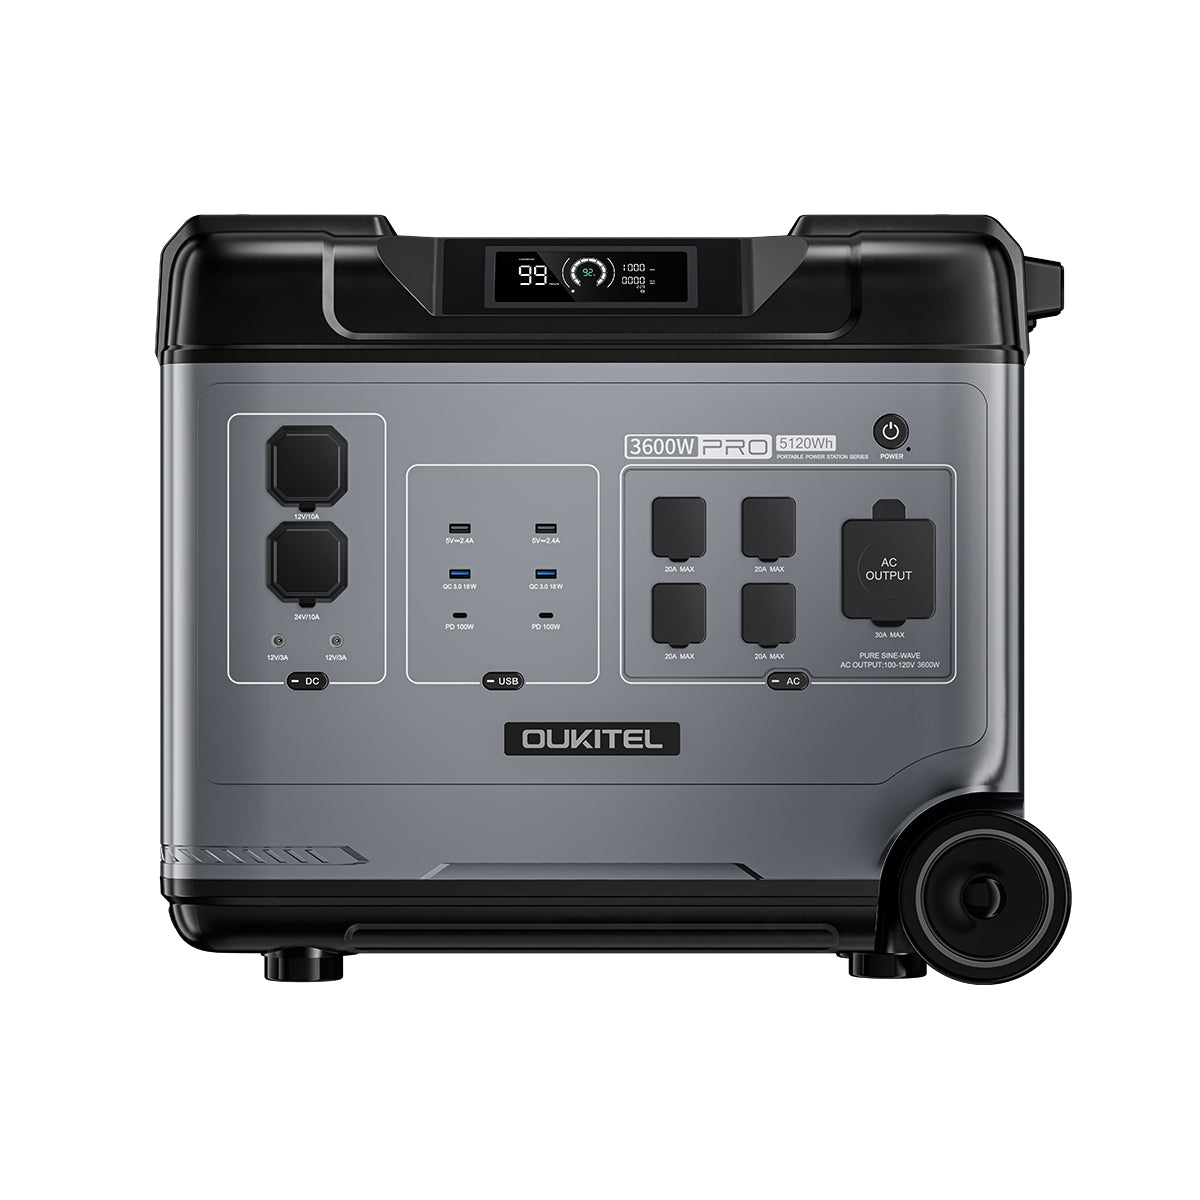 OUKITEL P5000 Pro Portable Power Station 5120Wh/3600W